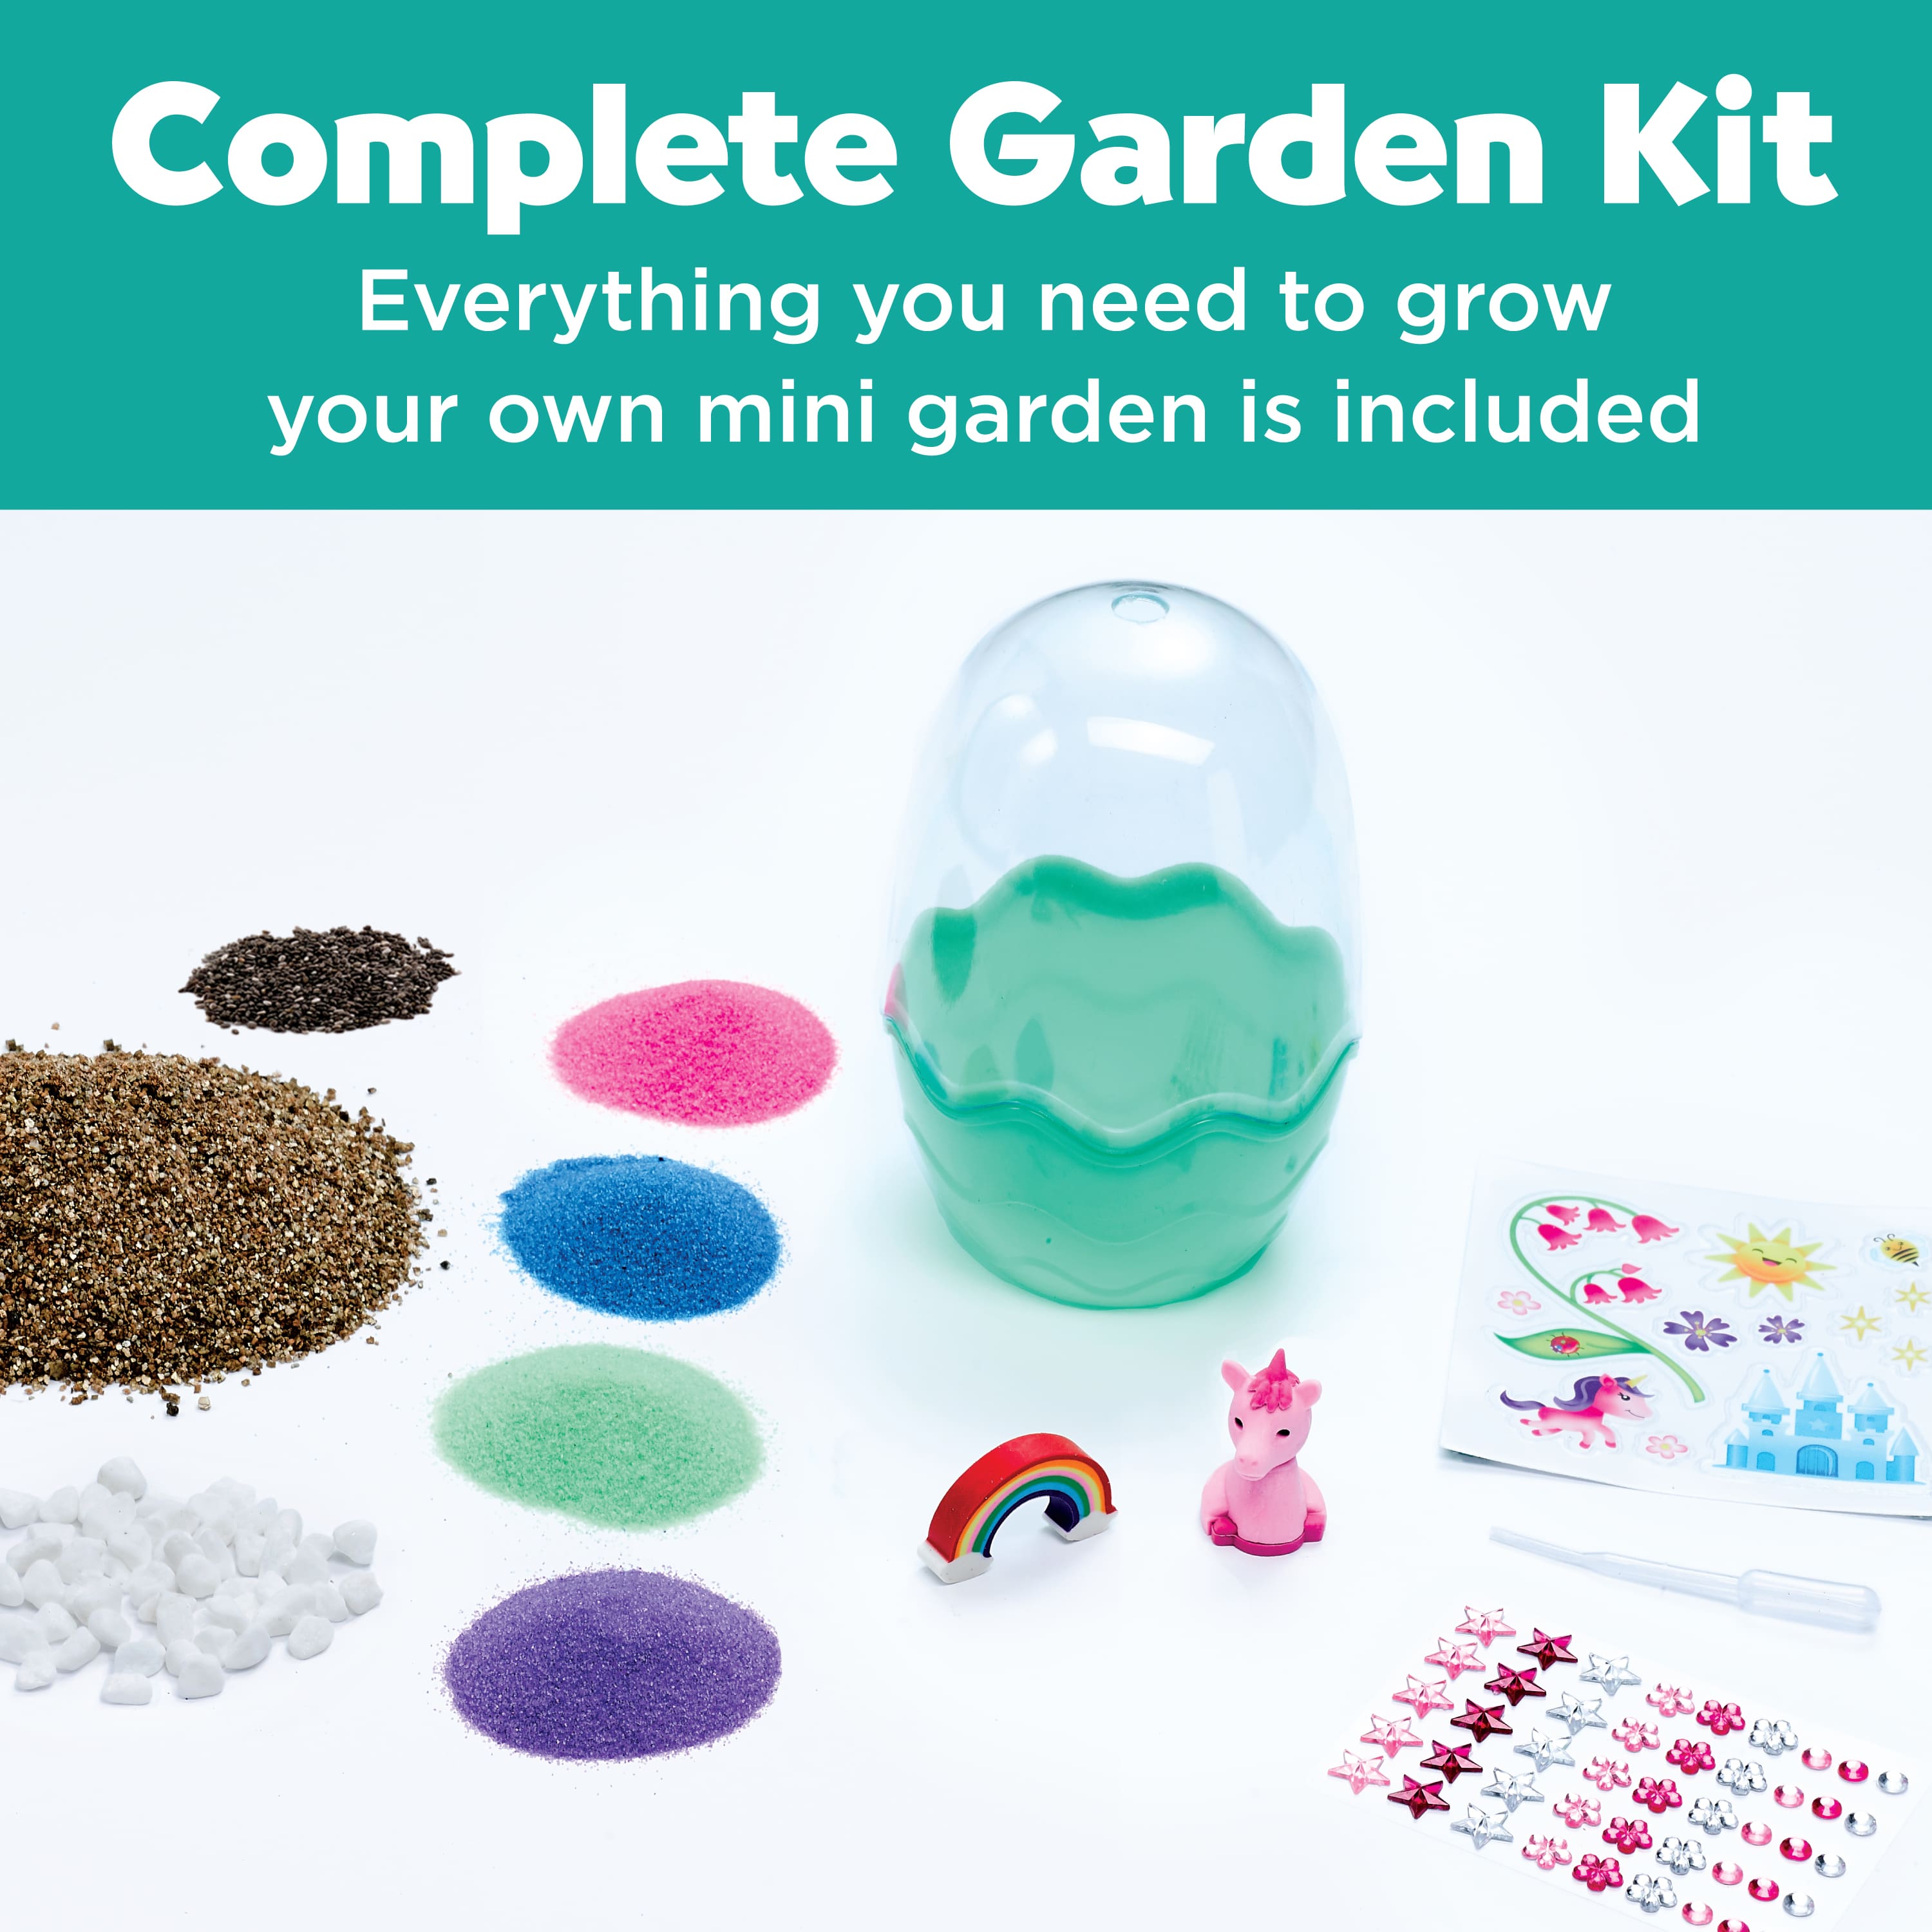 12 Pack: Faber-Castell&#xAE; Creativity for Kids&#xAE; Mini Garden Unicorn